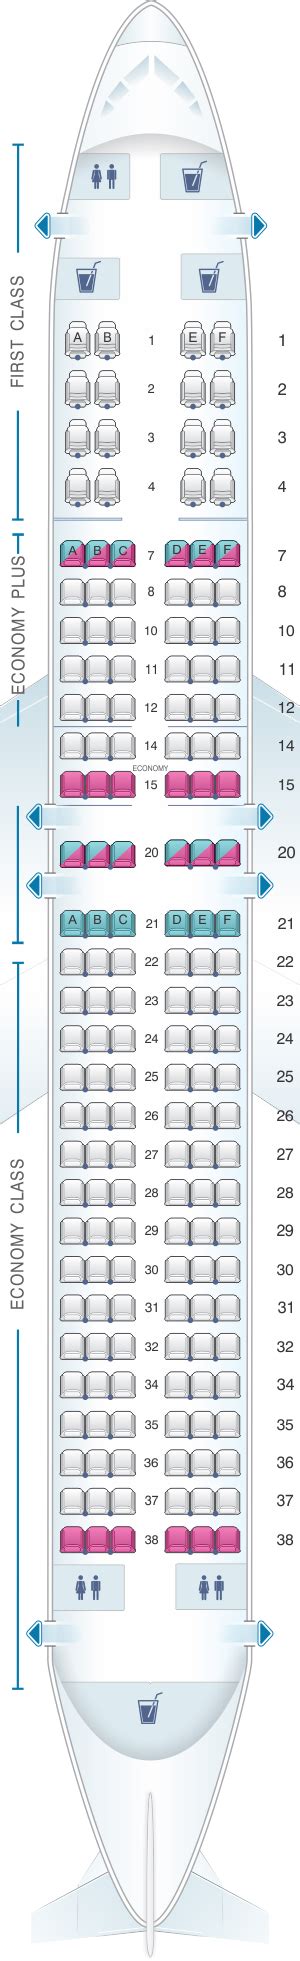 Seat Map United Airlines Boeing B737 800 Version 4 Seatmaestro